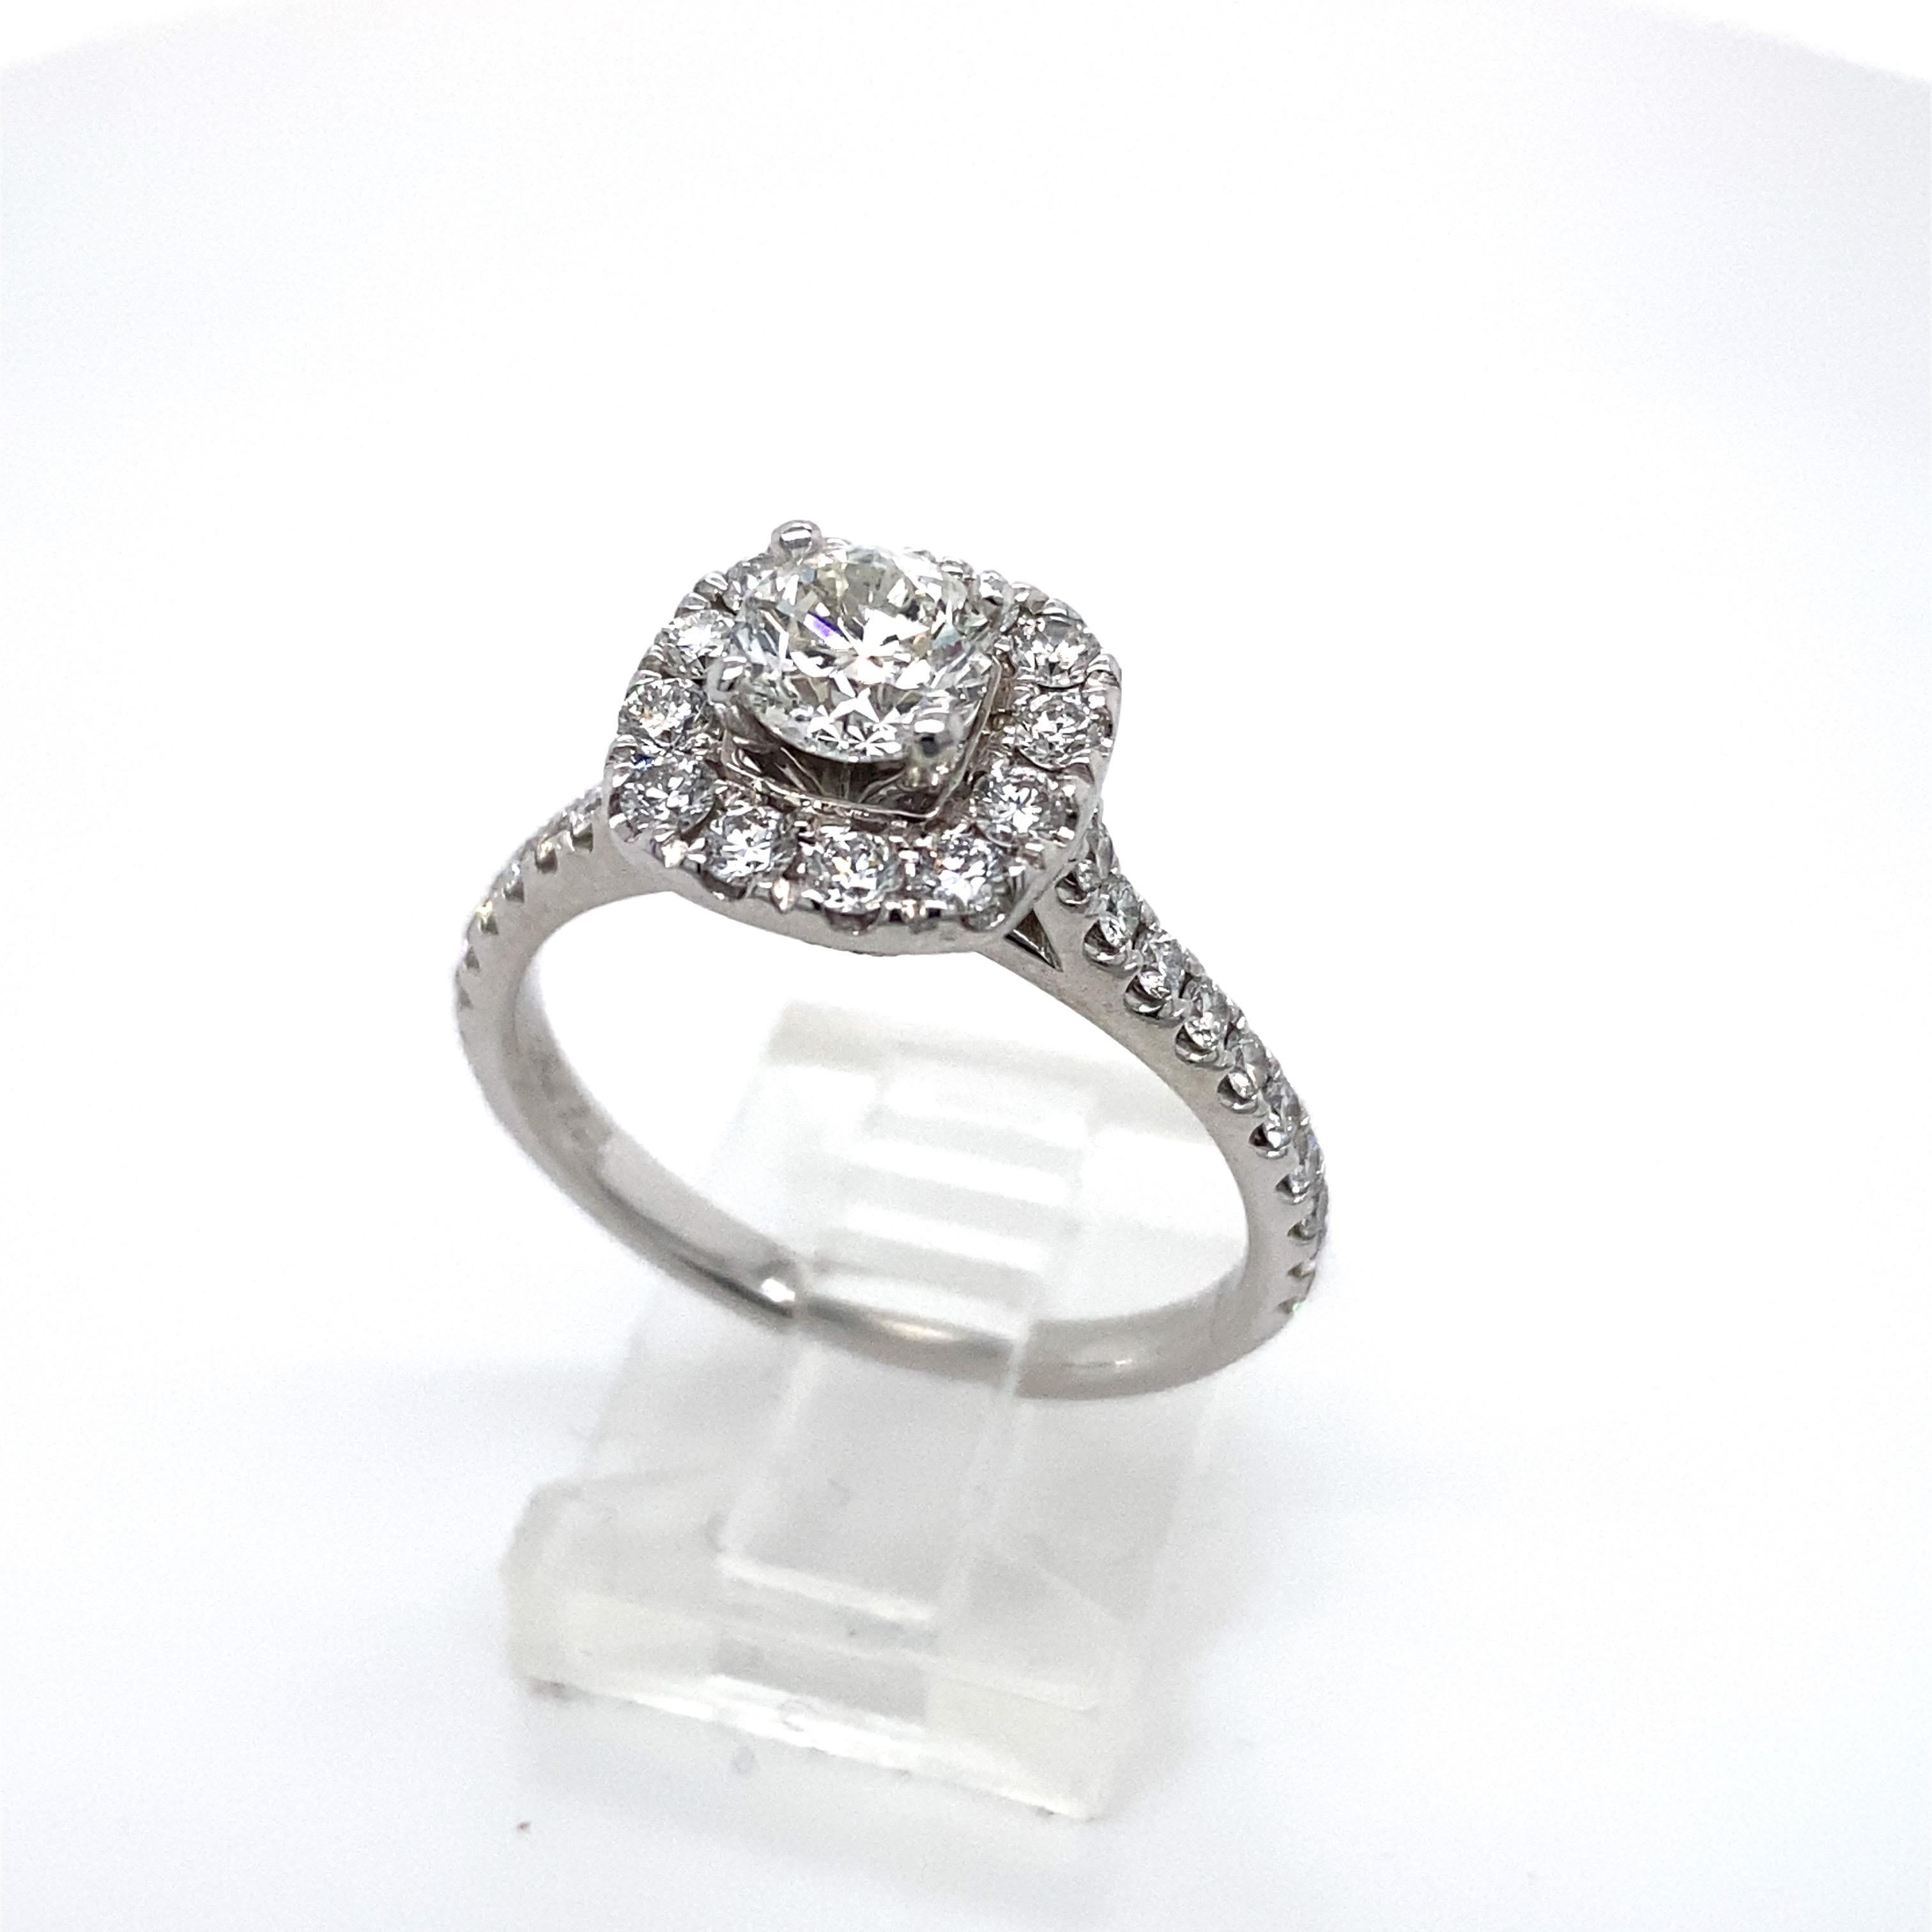 NEIL LANE Round Diamond Halo 1.27 tcw Engagement Ring in 14kt White Gold 4